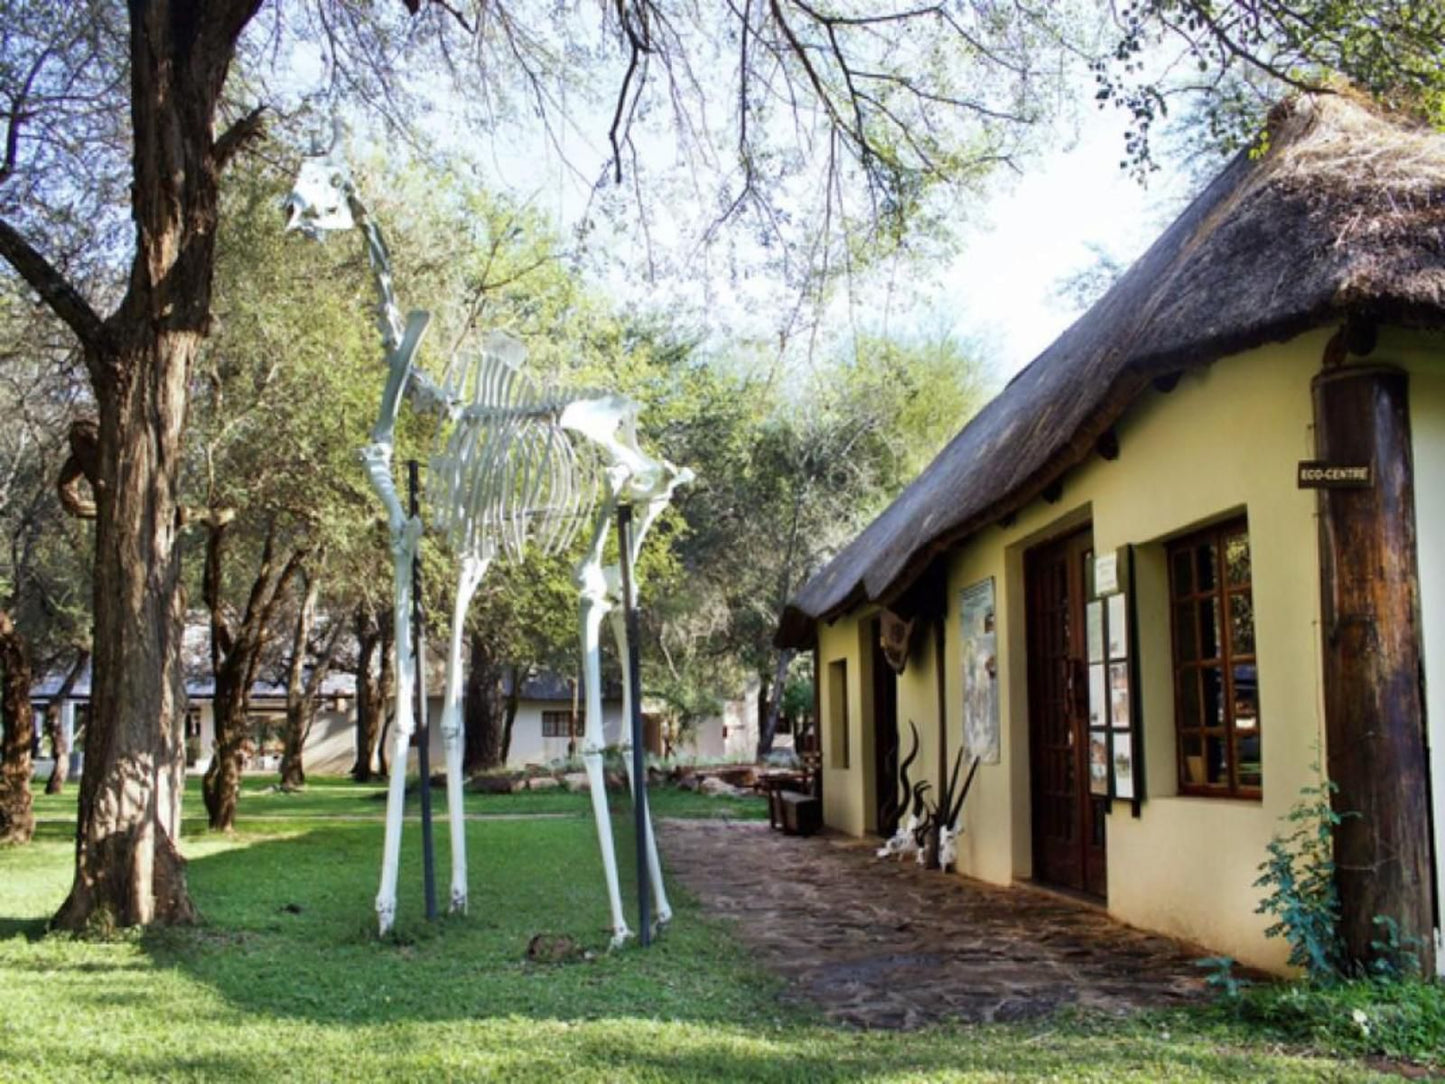 Mogalakwena River Lodge Alldays Limpopo Province South Africa House, Building, Architecture